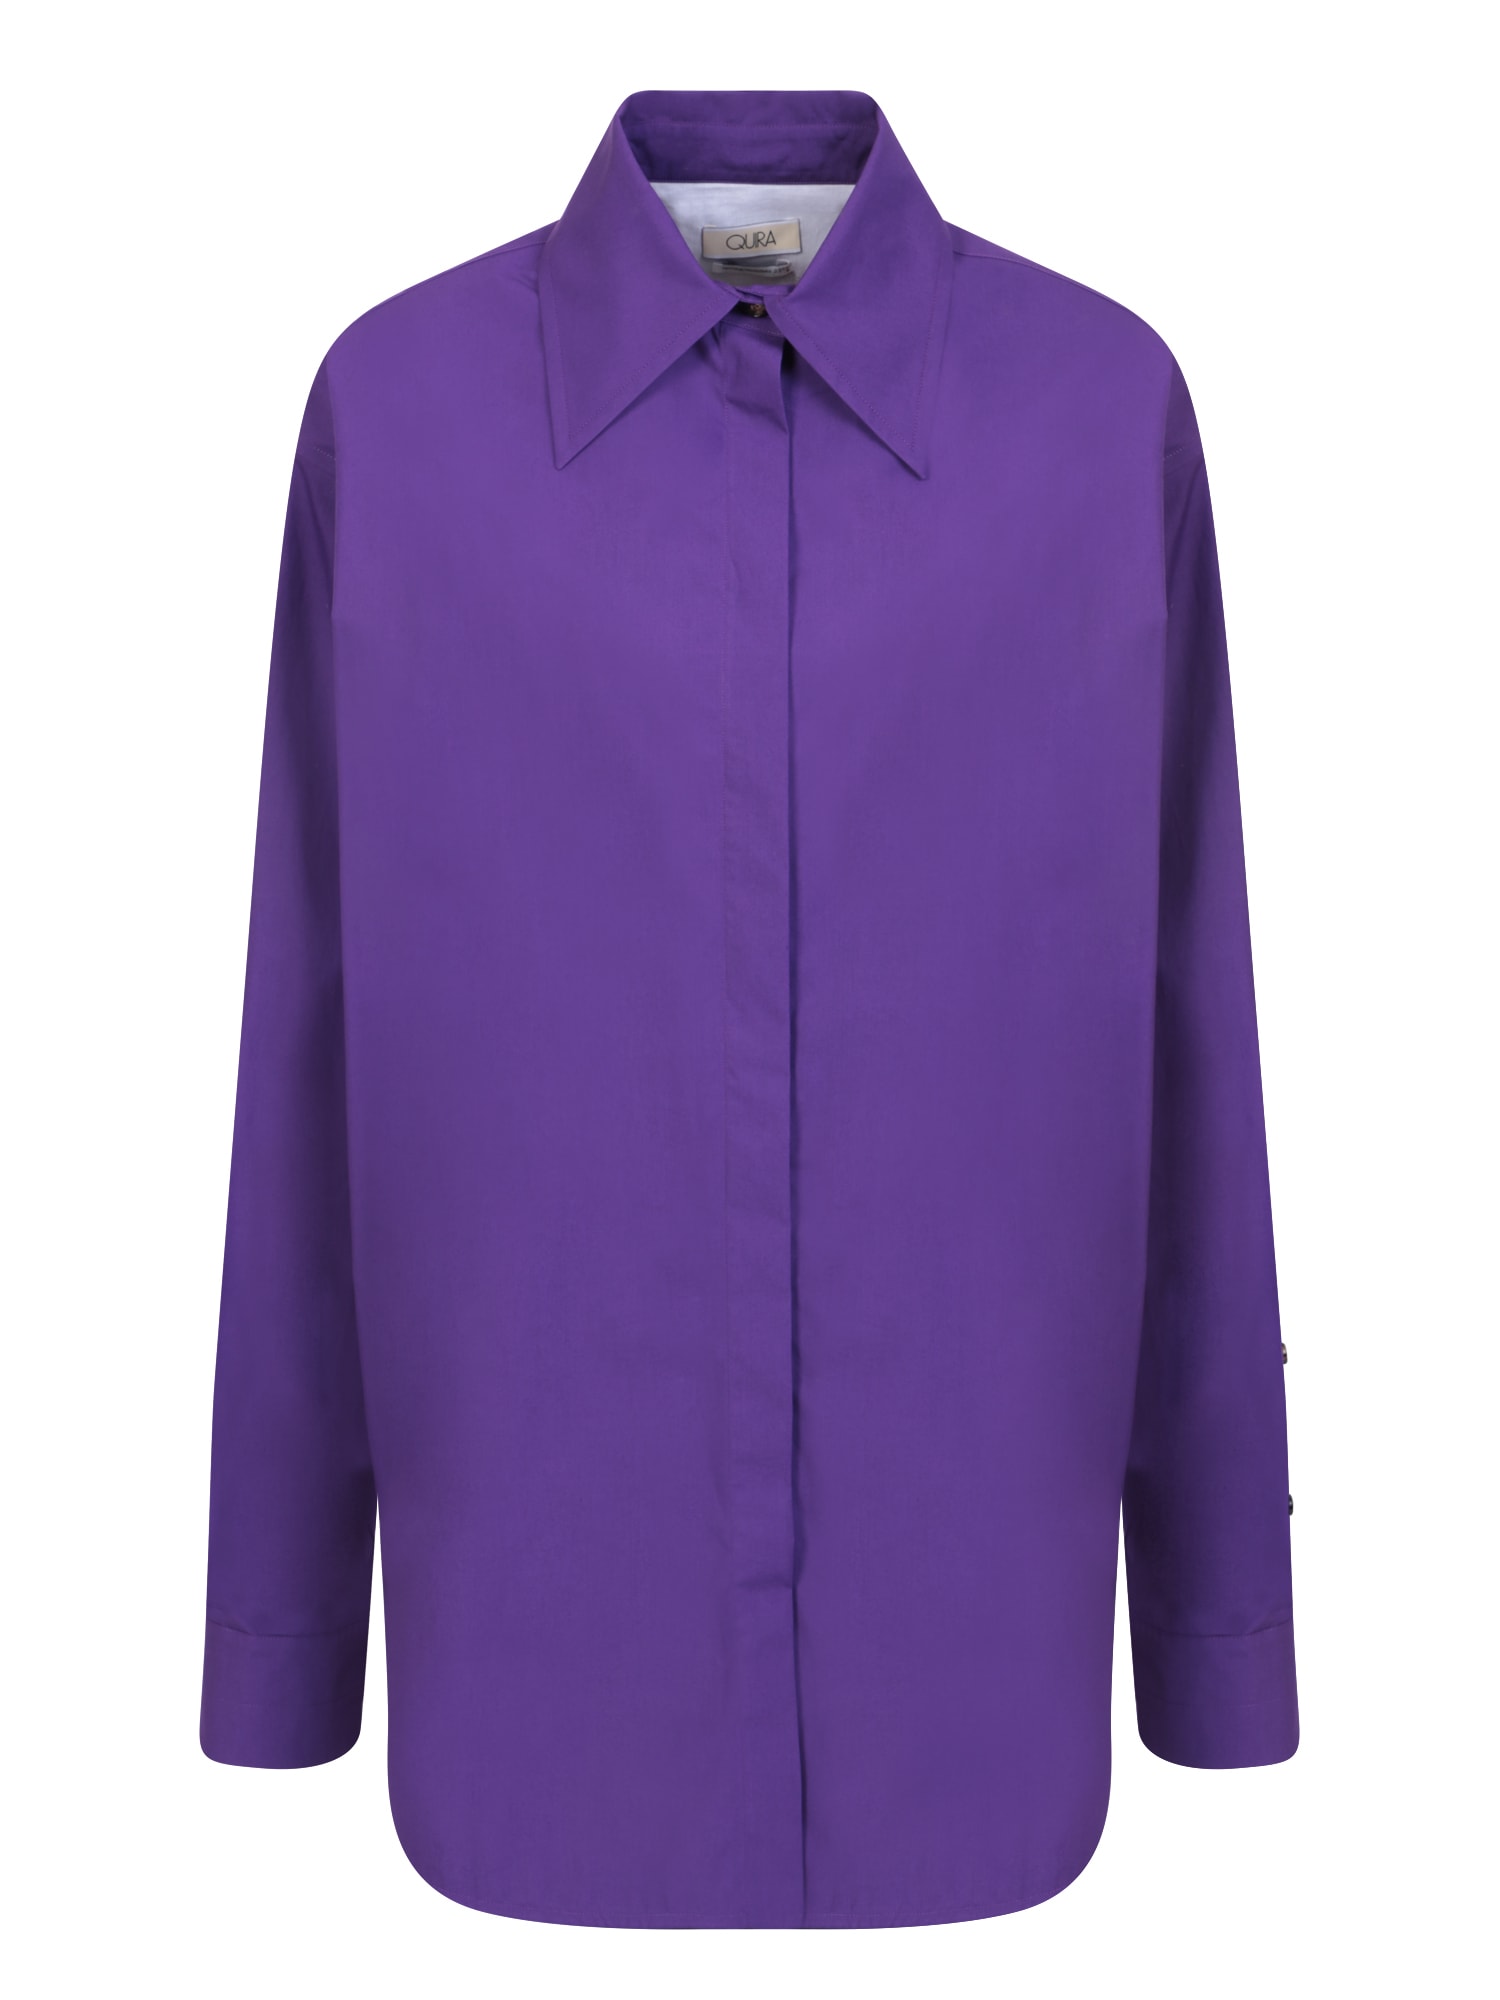 Oversize Purple Shirt